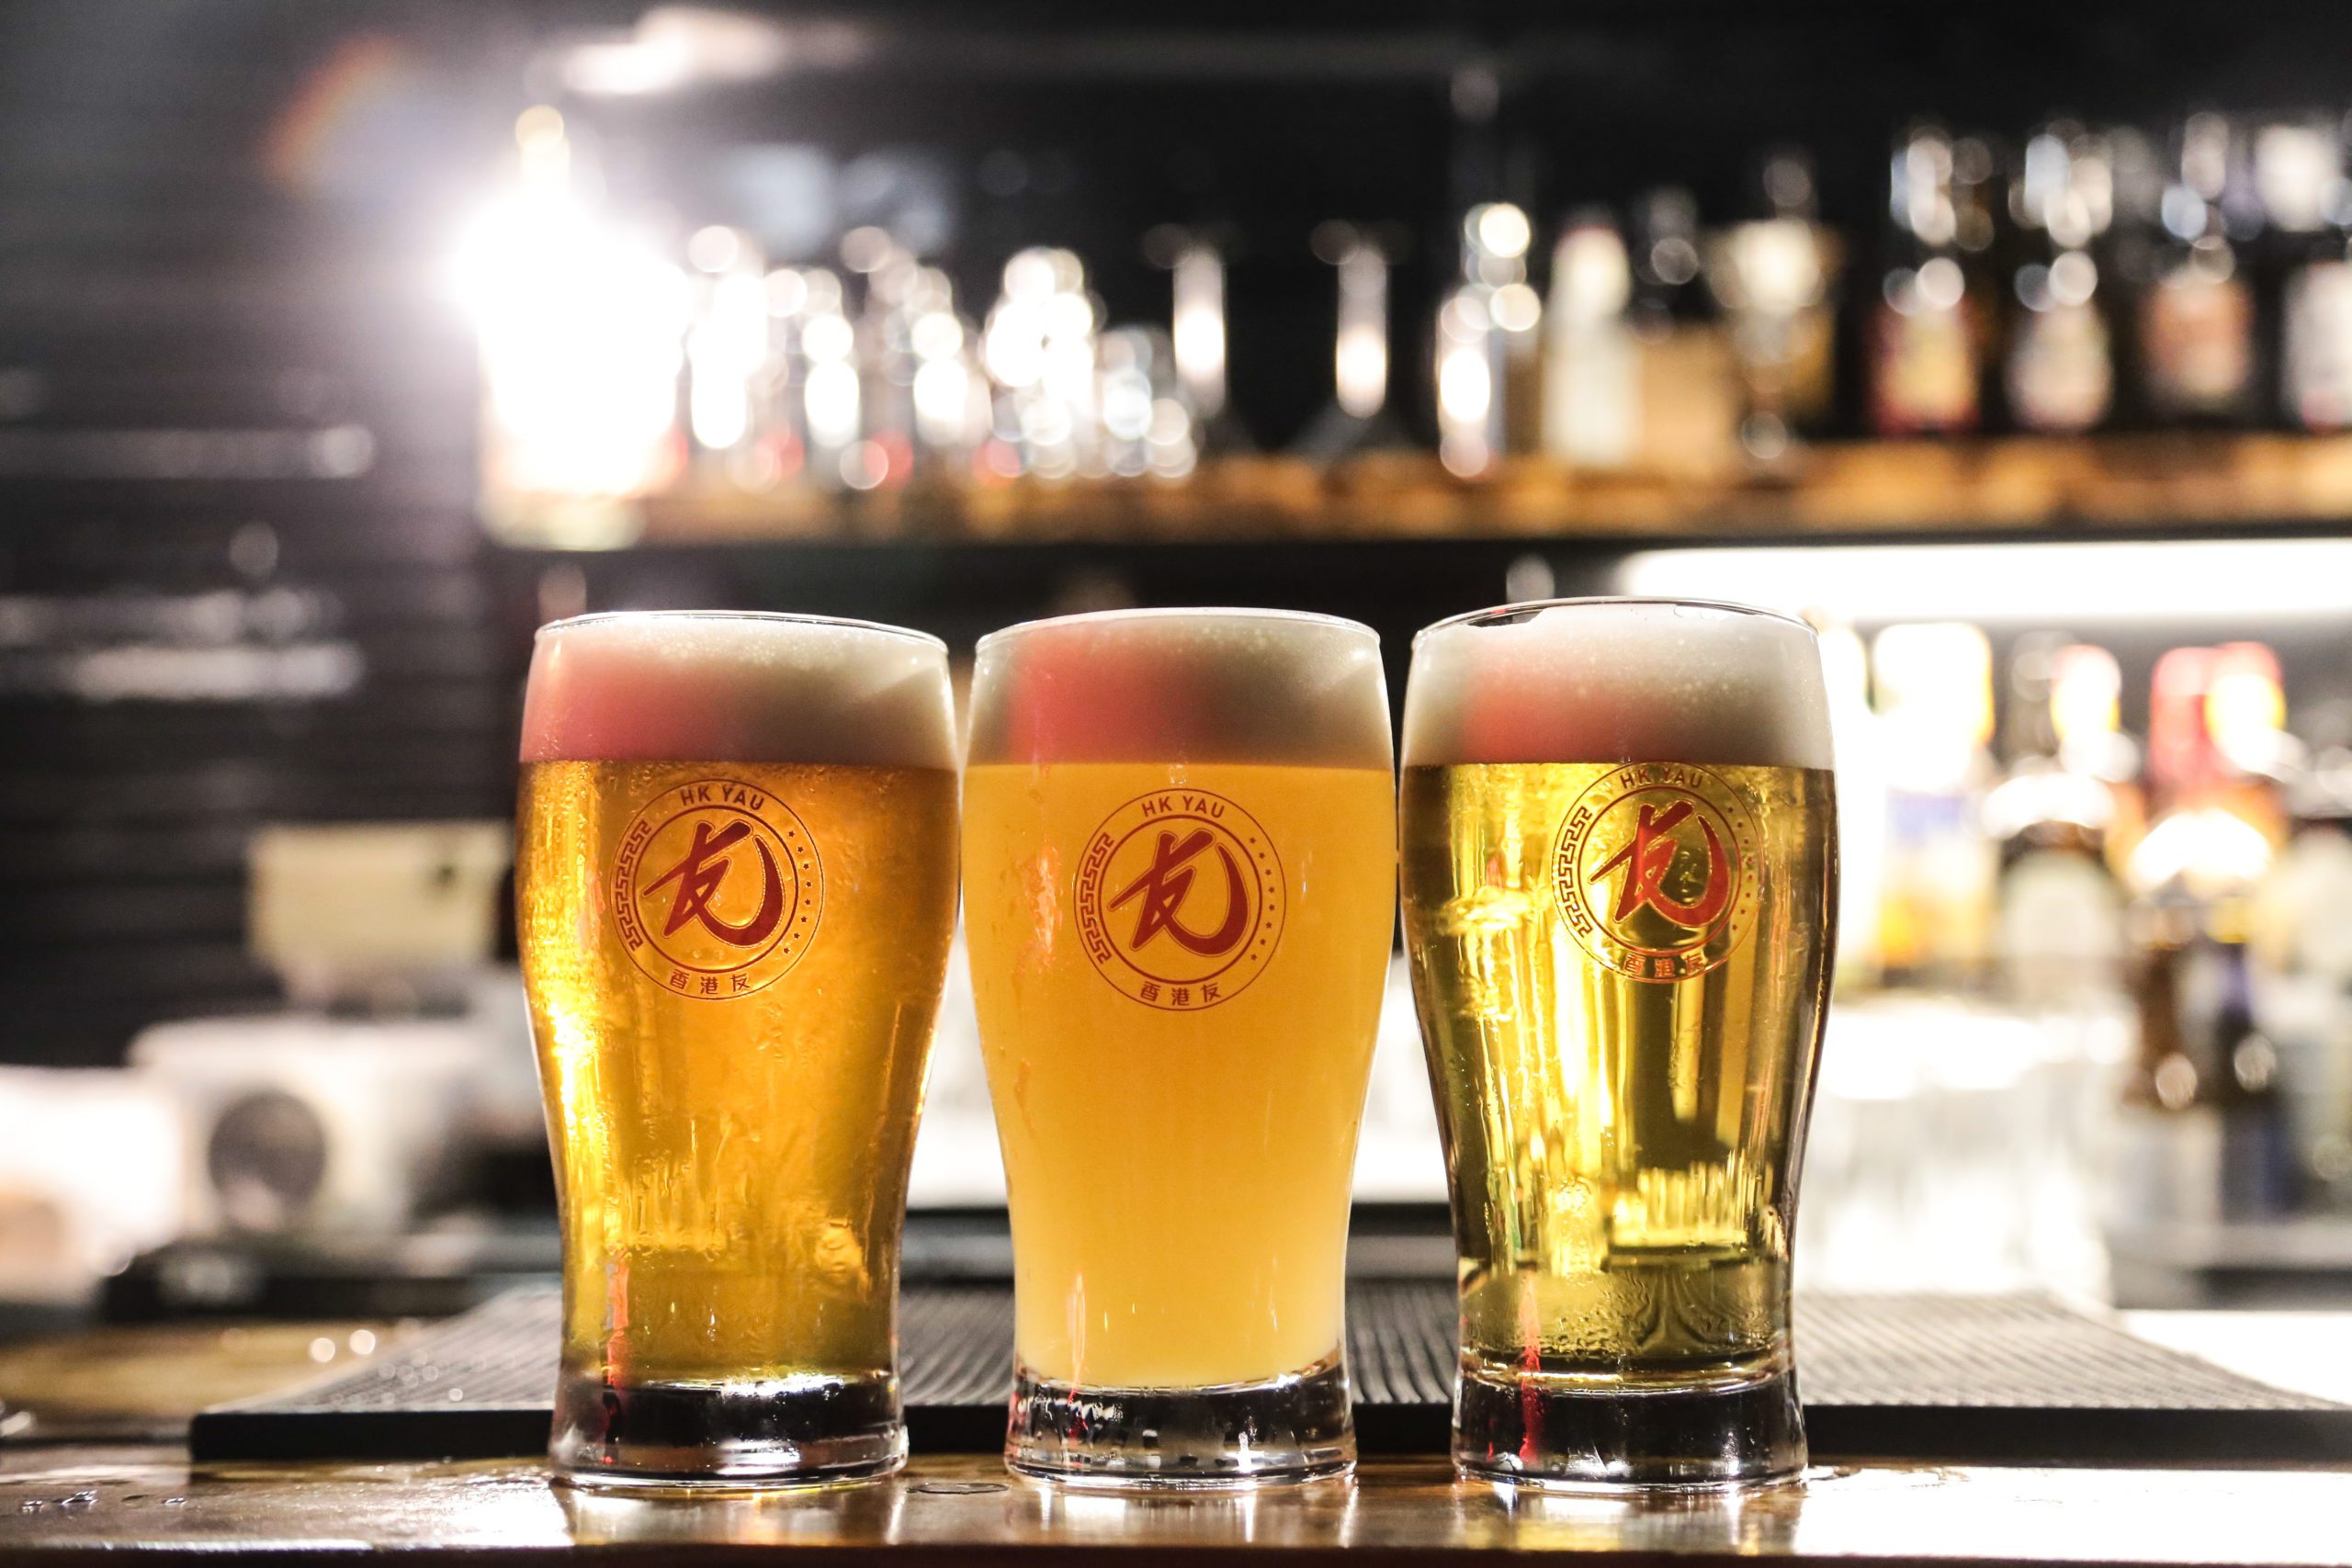 three pints of fresh draft beer with HK YAU logo printed on glass